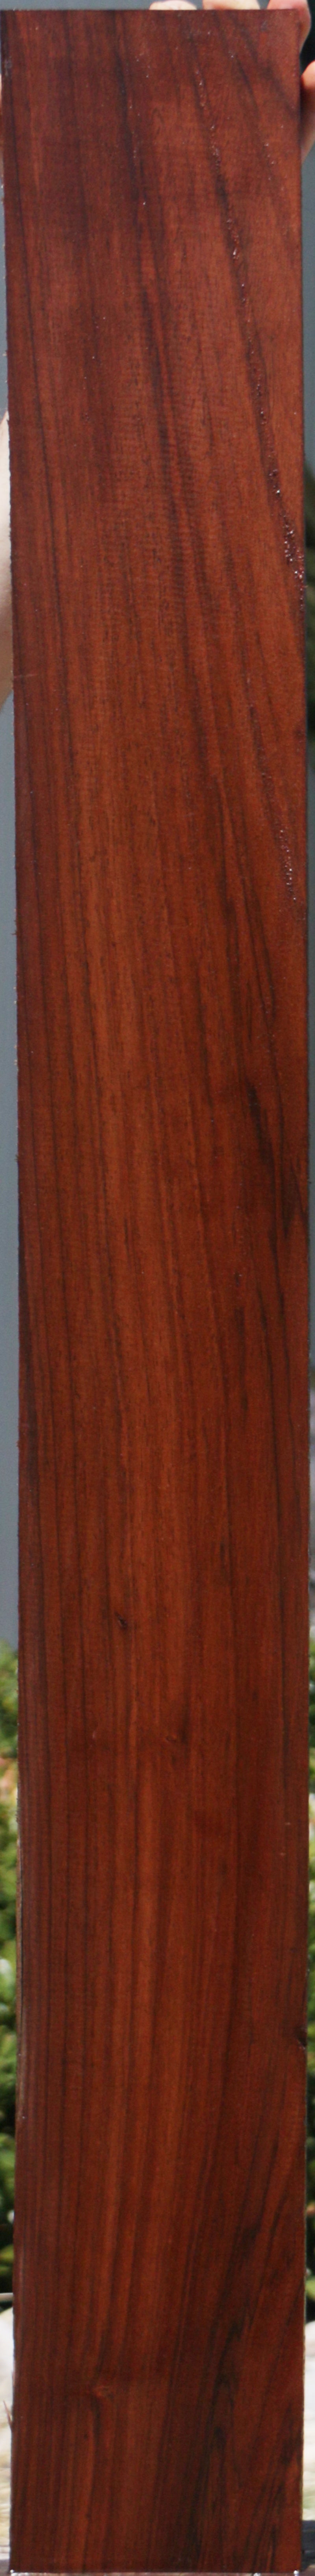 Brazilian Walnut Lumber